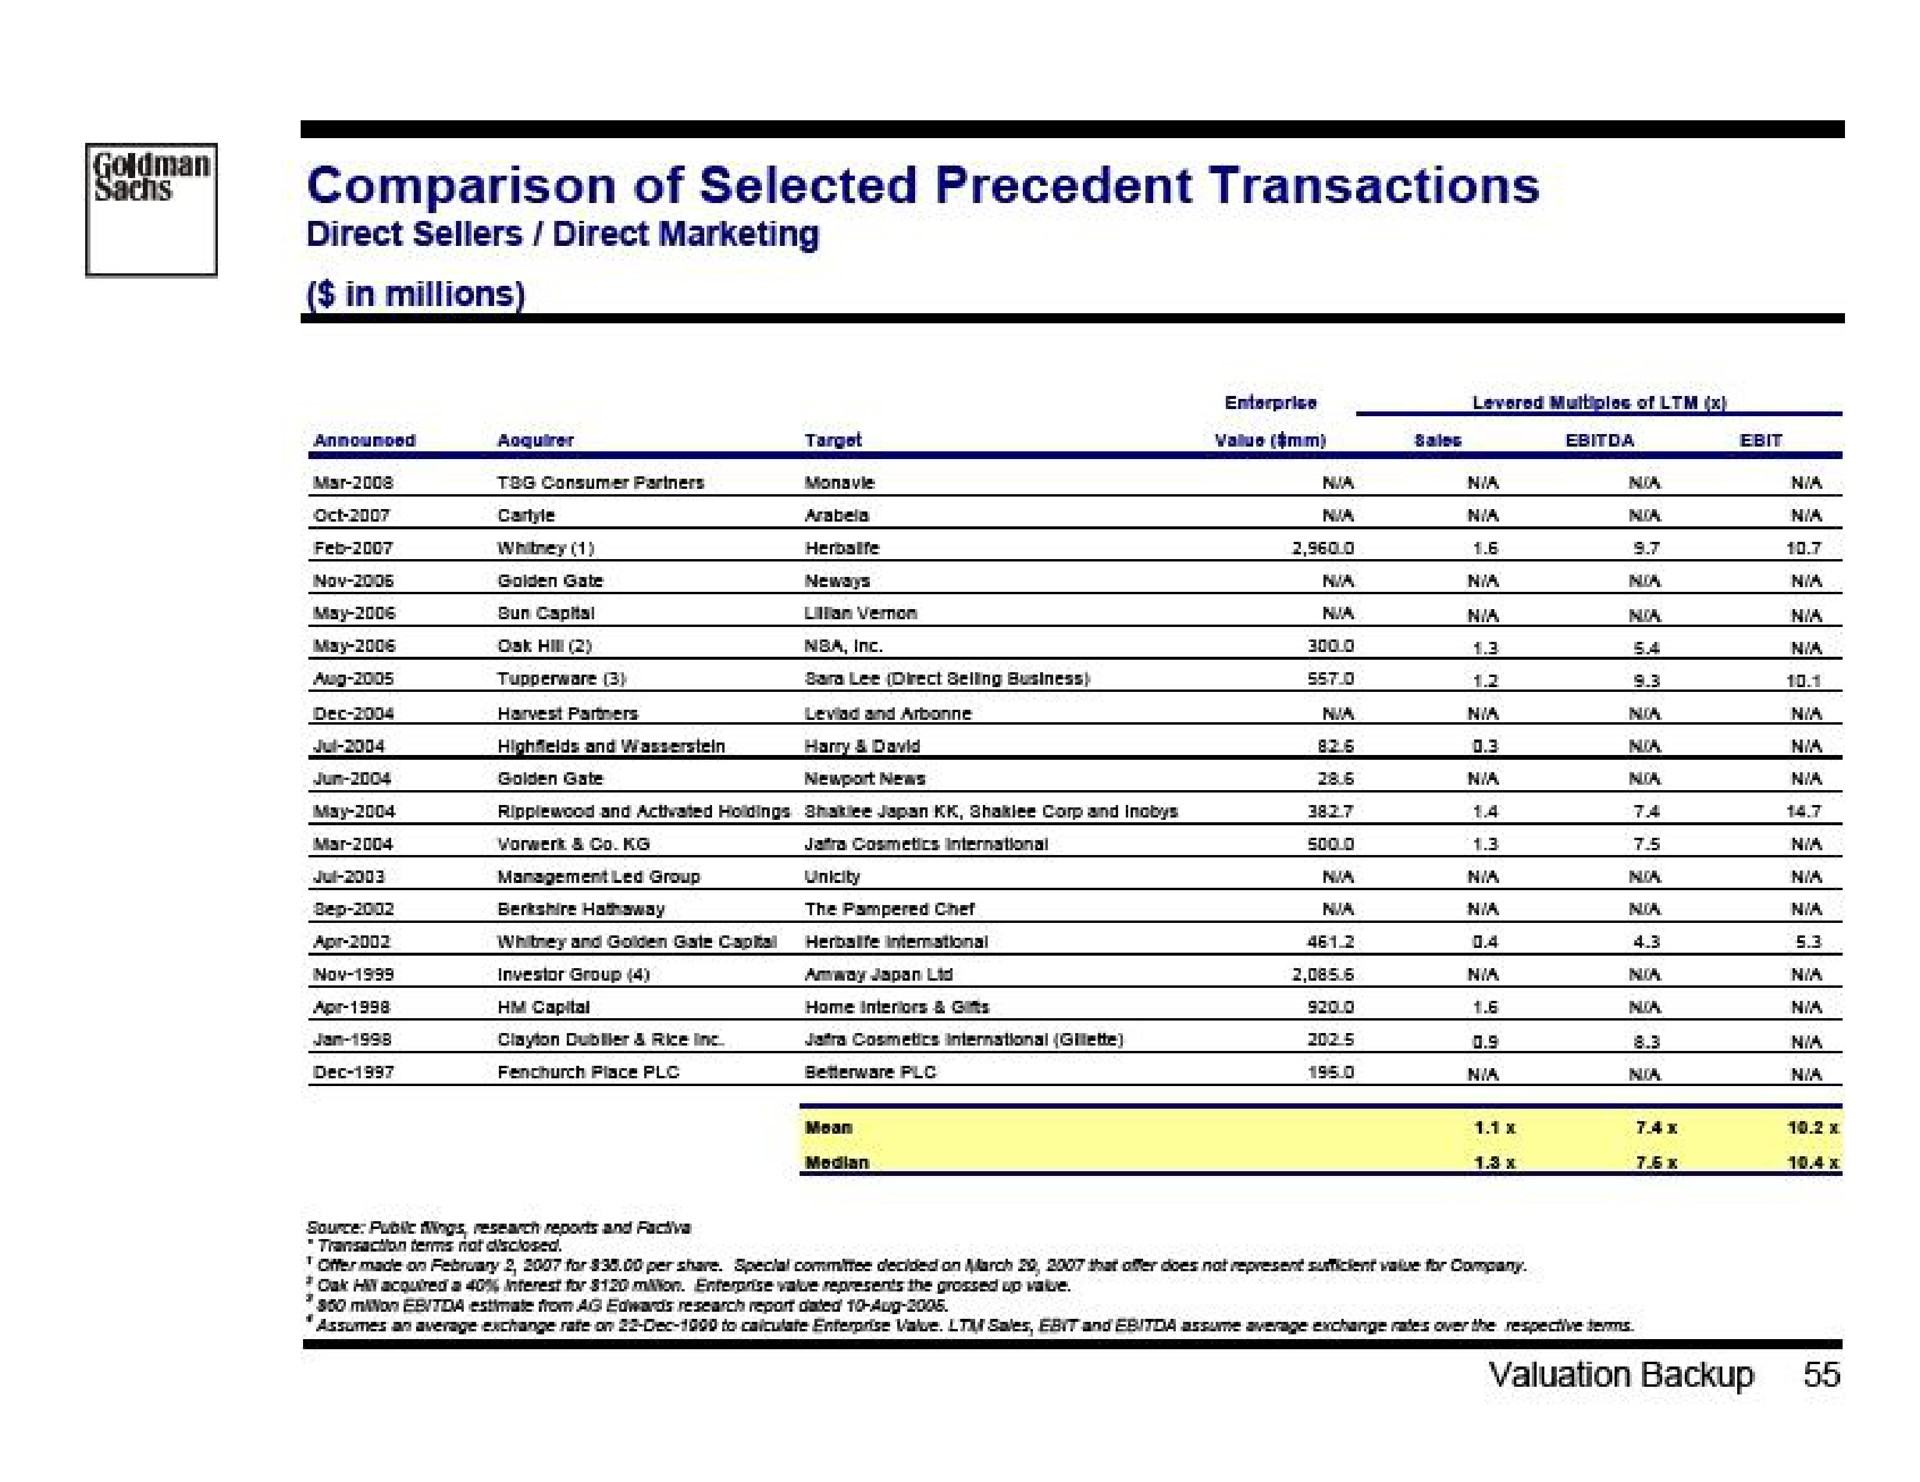 comparison of selected precedent transactions | Goldman Sachs